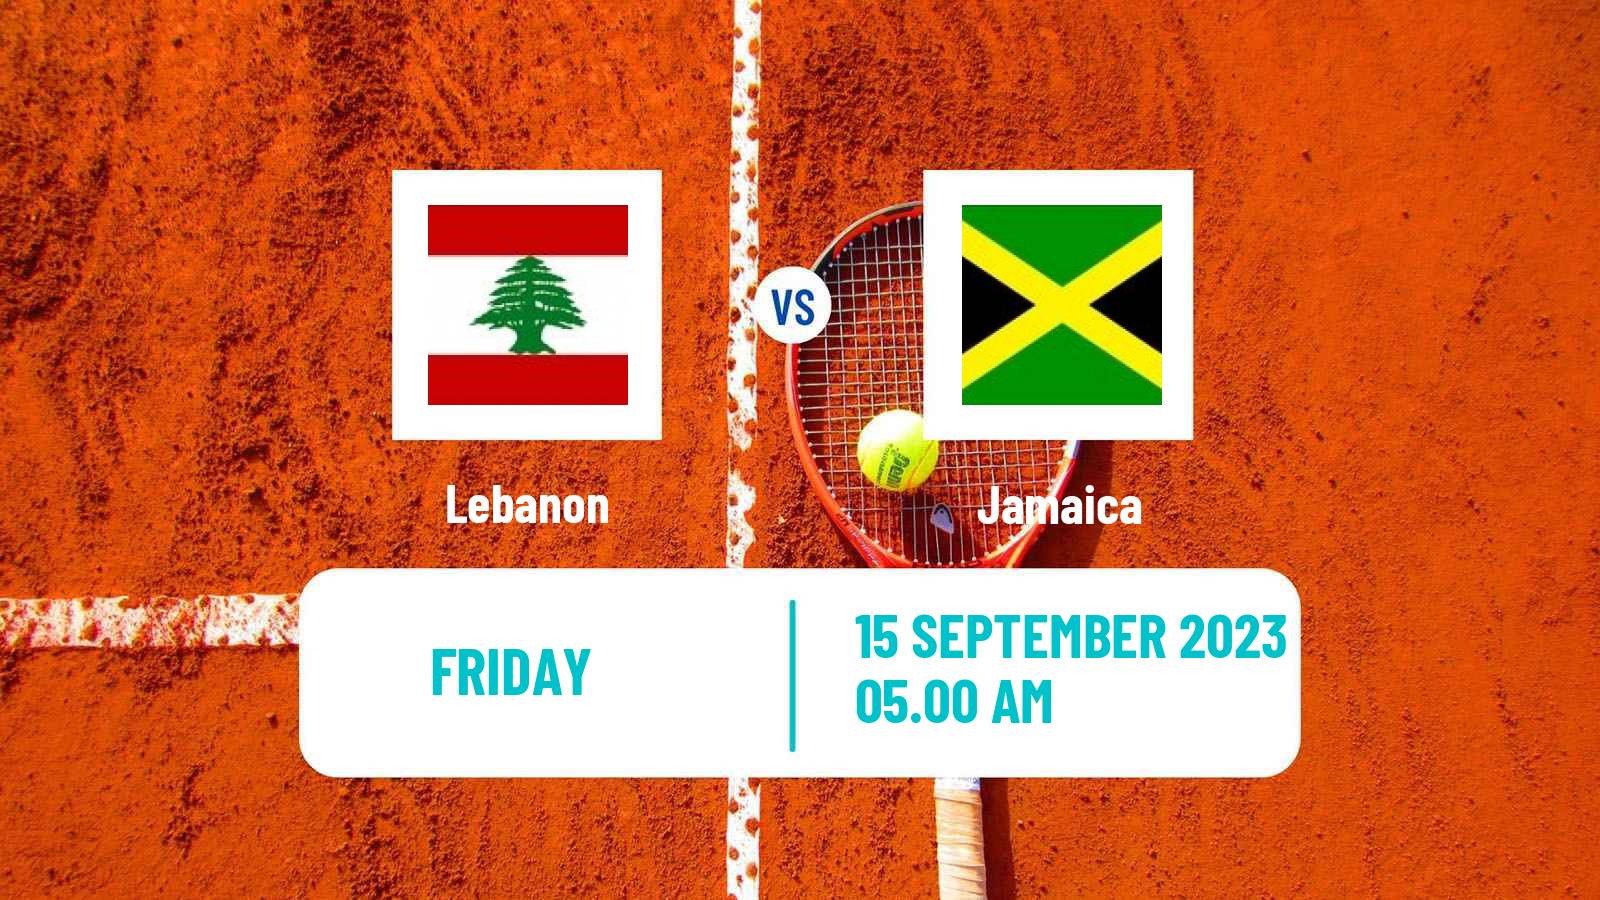 Tennis Davis Cup World Group II Teams Lebanon - Jamaica